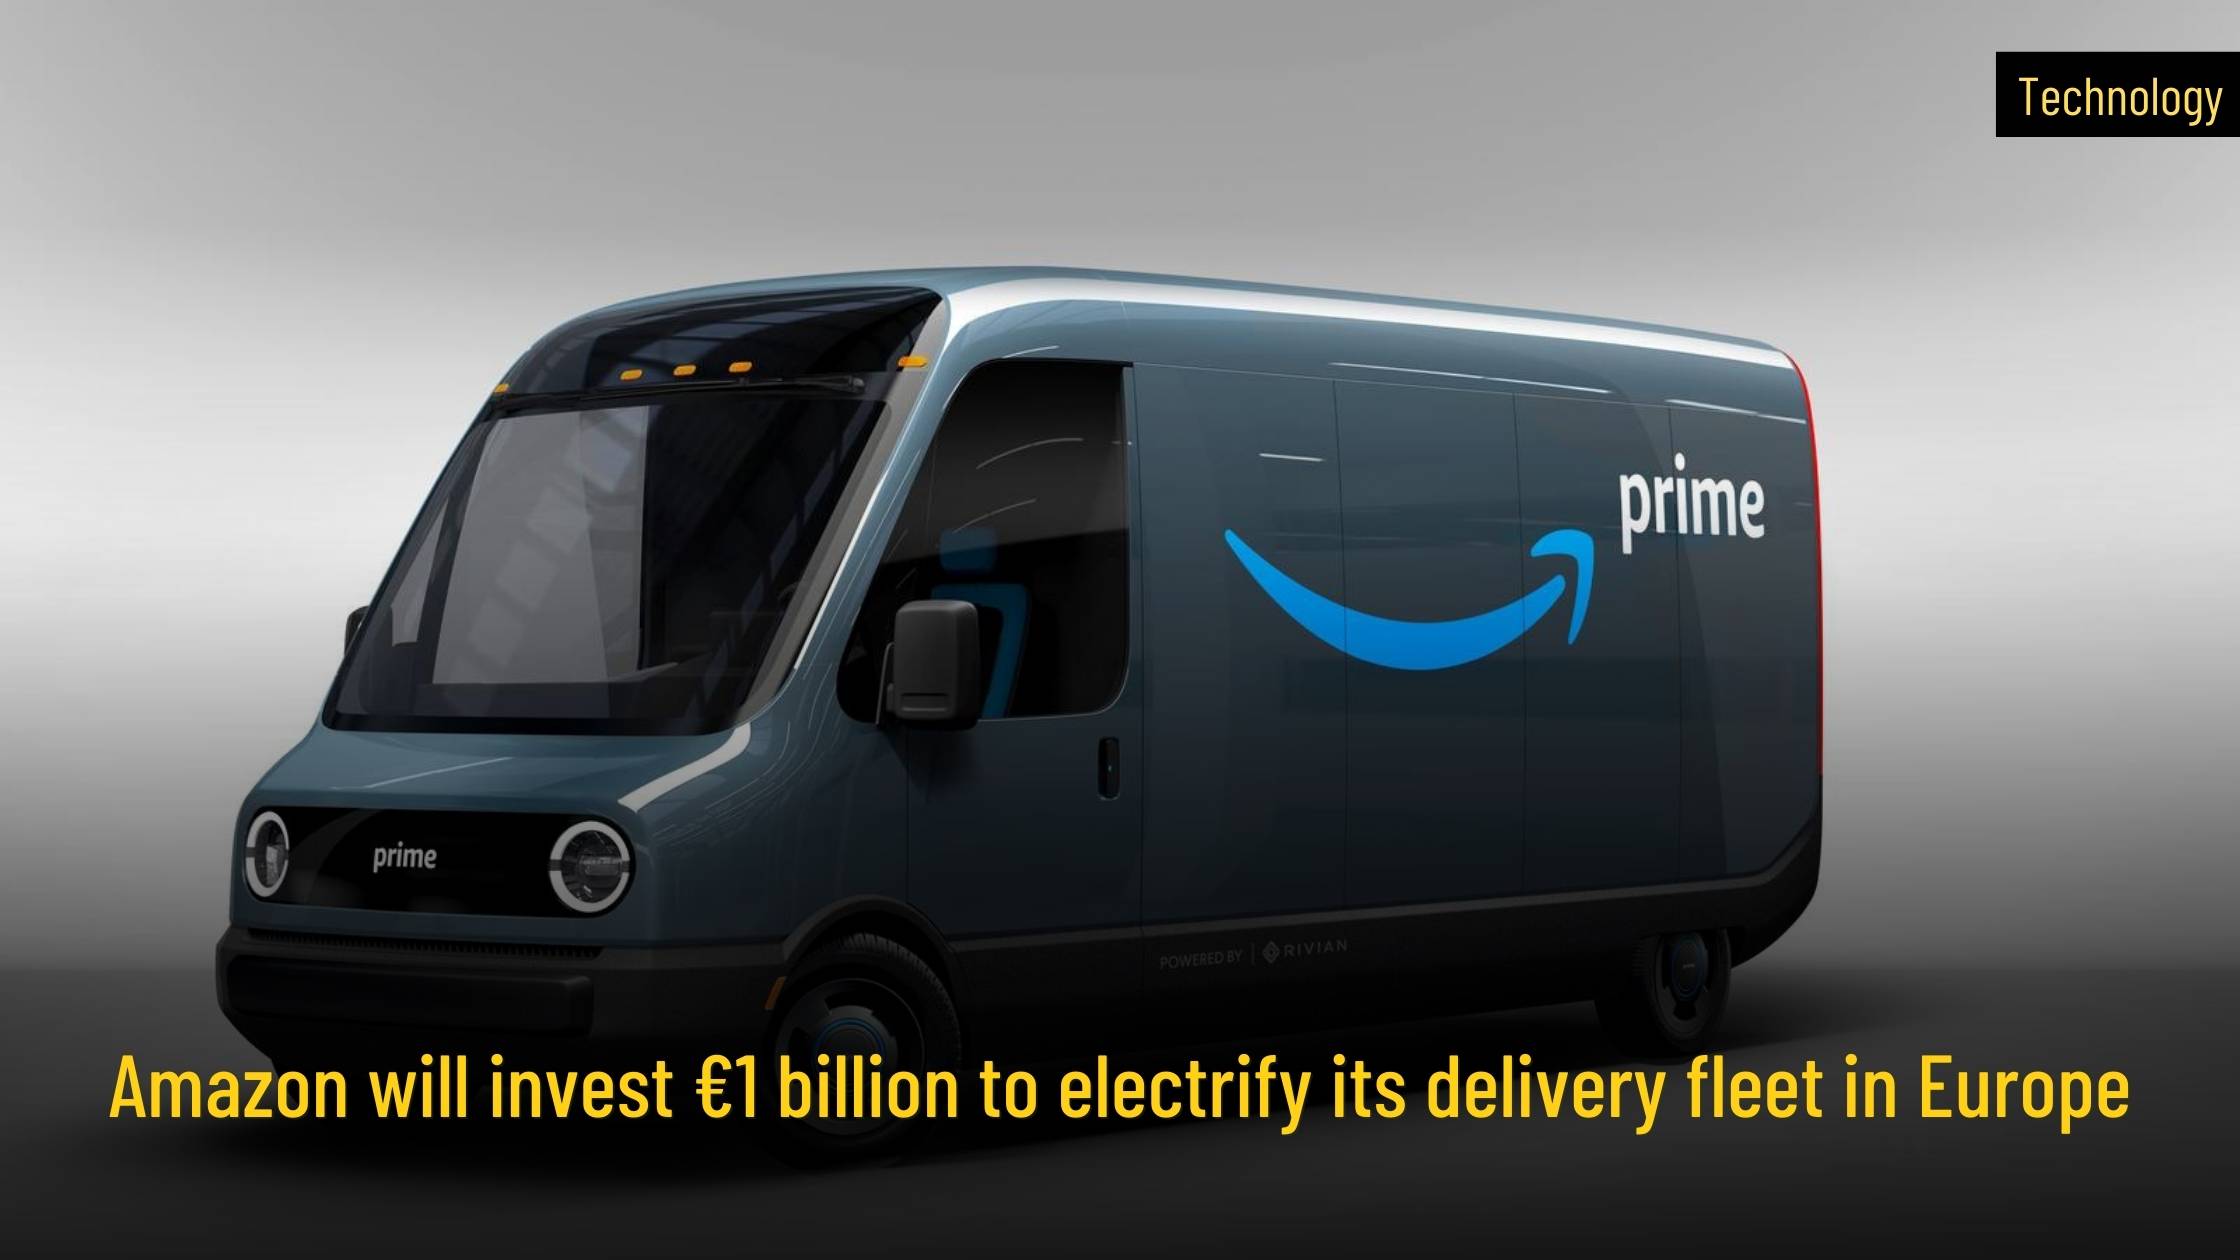 Amazon delivery fleet in Europe